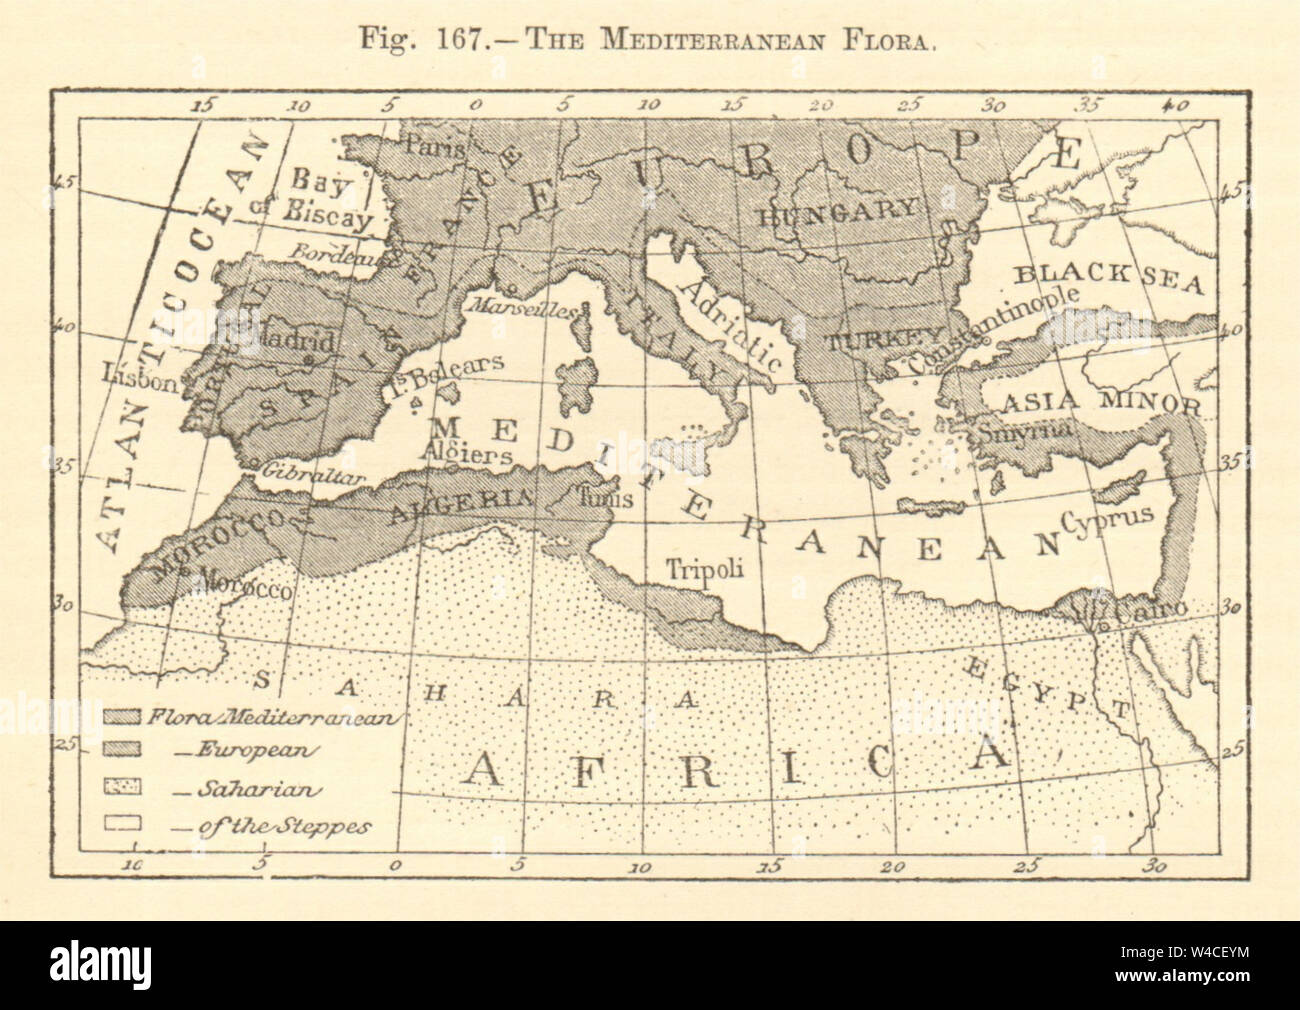 The Mediterranean Flora. Sketch map 1886 old antique vintage plan chart Stock Photo